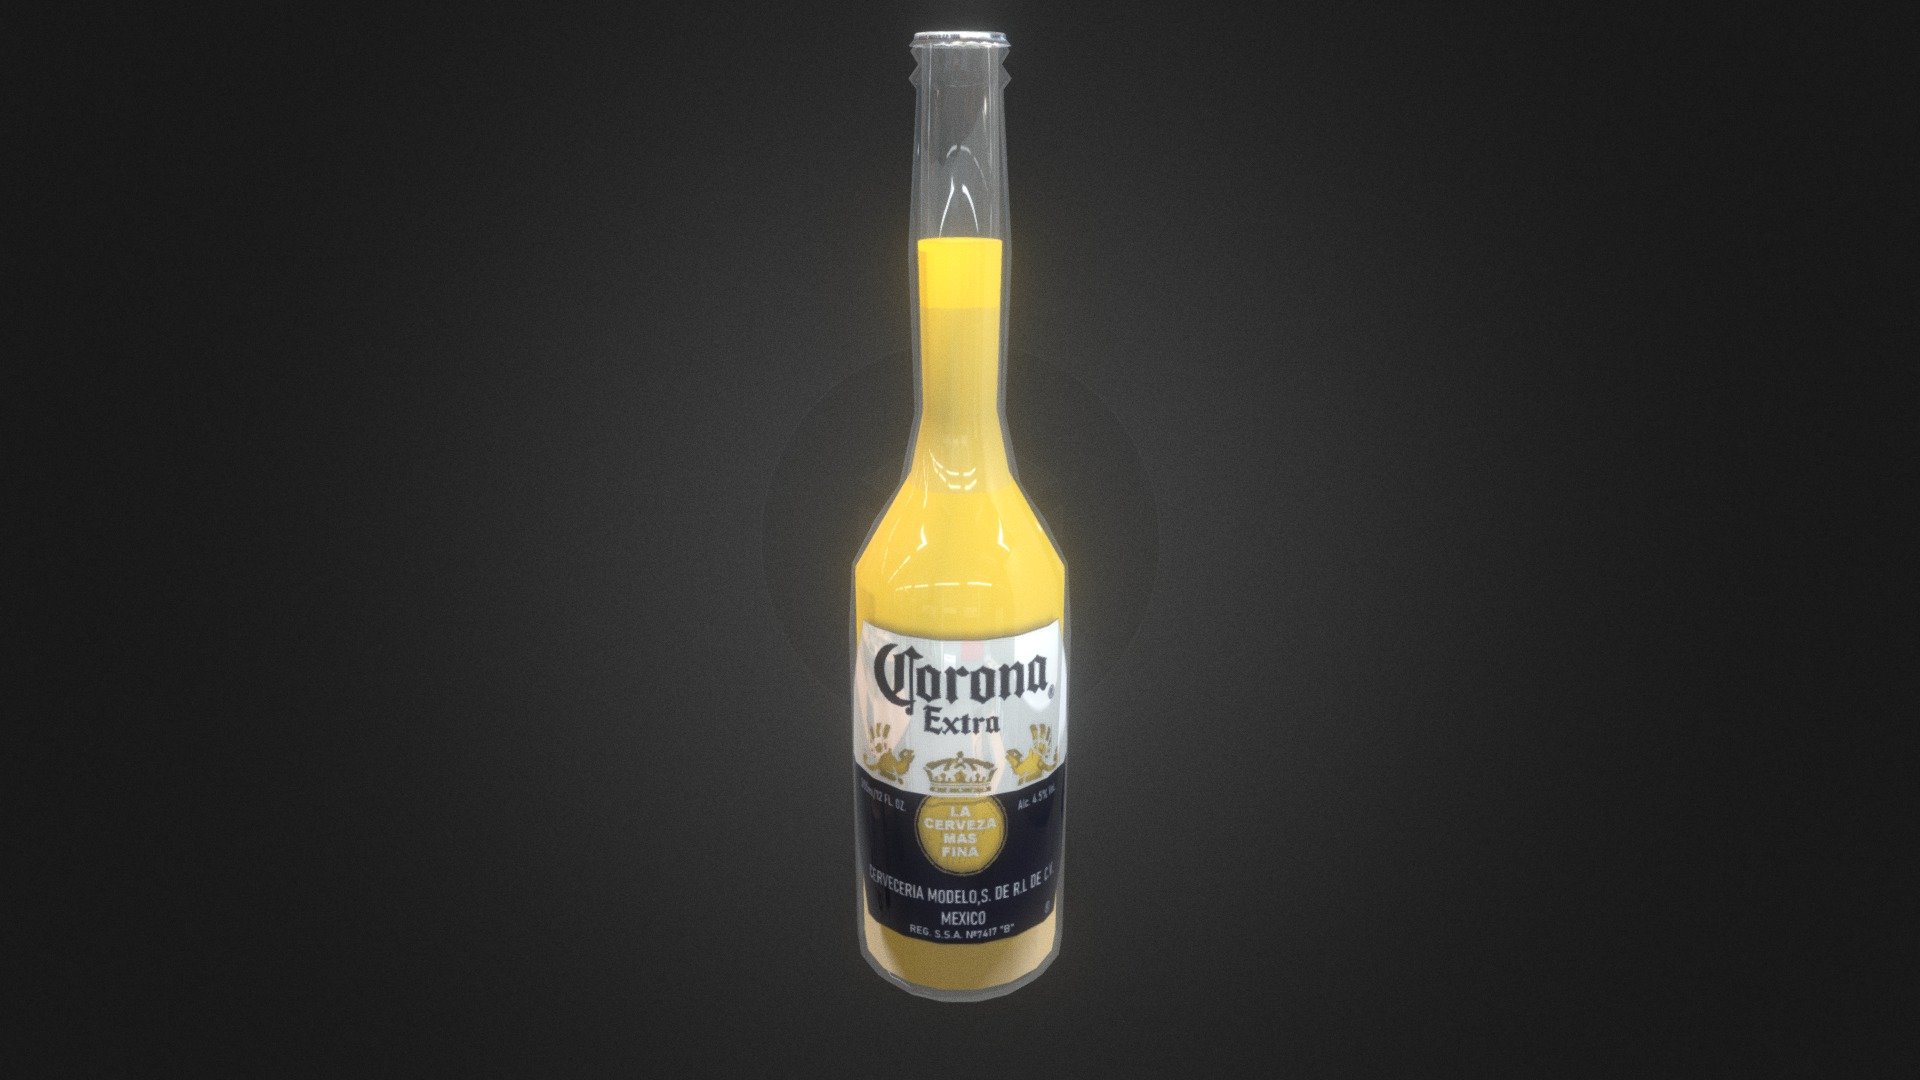 Corona Extra beer bottle sold in Japan - Corona Extra 355ml bottle (JAPAN) - Download Free 3D model by VRC-IW 3d model